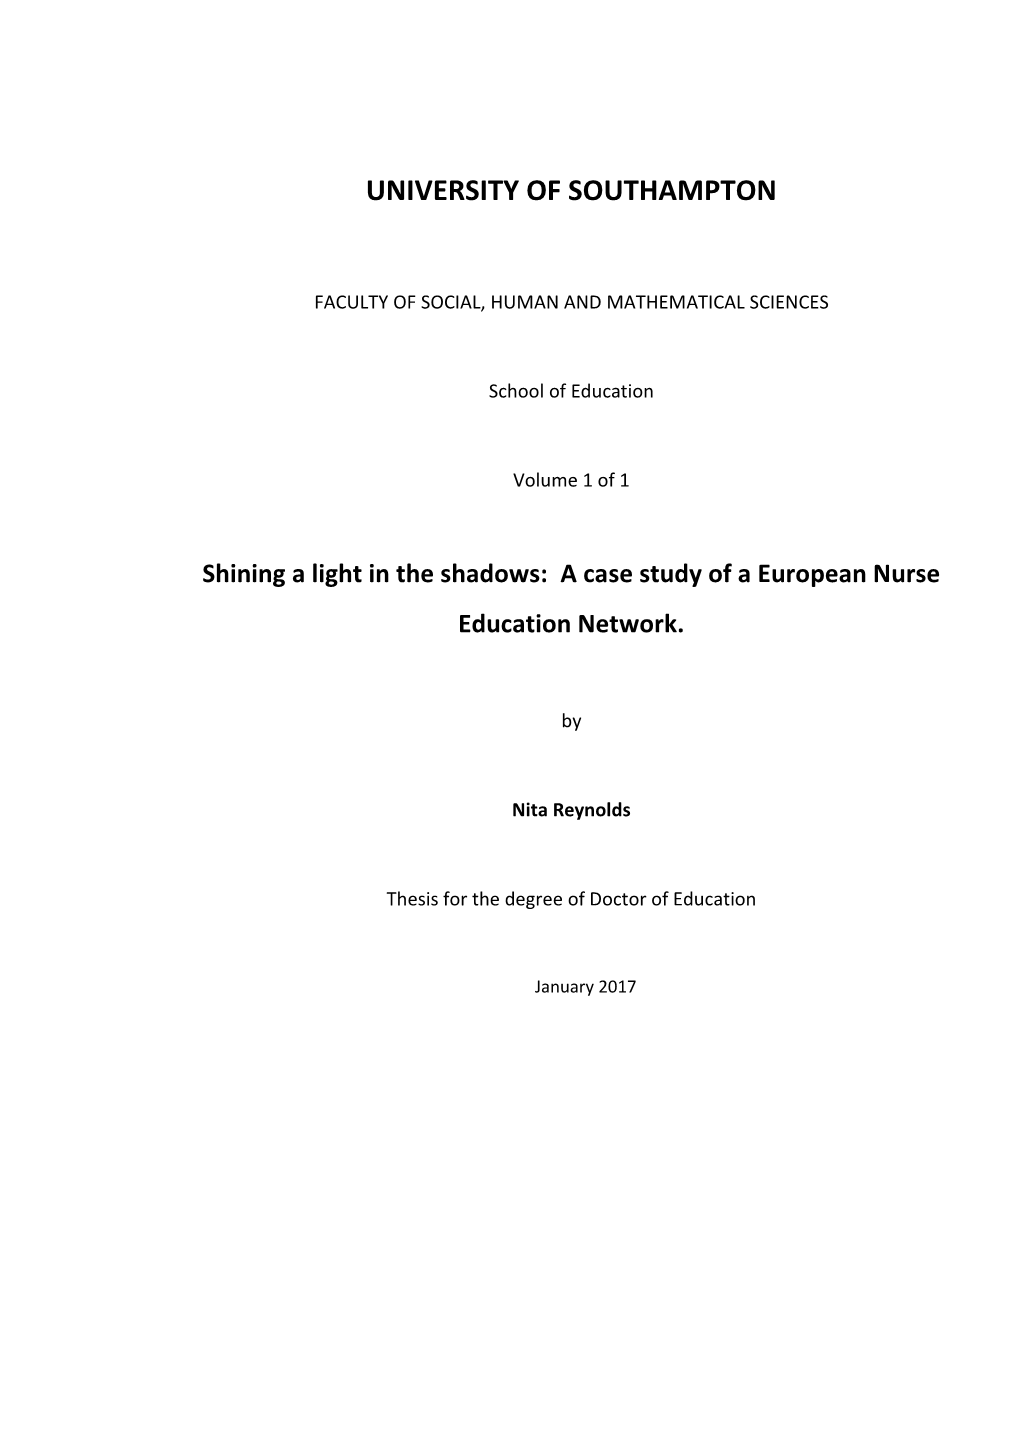 A Case Study of a European Nurse Education Network